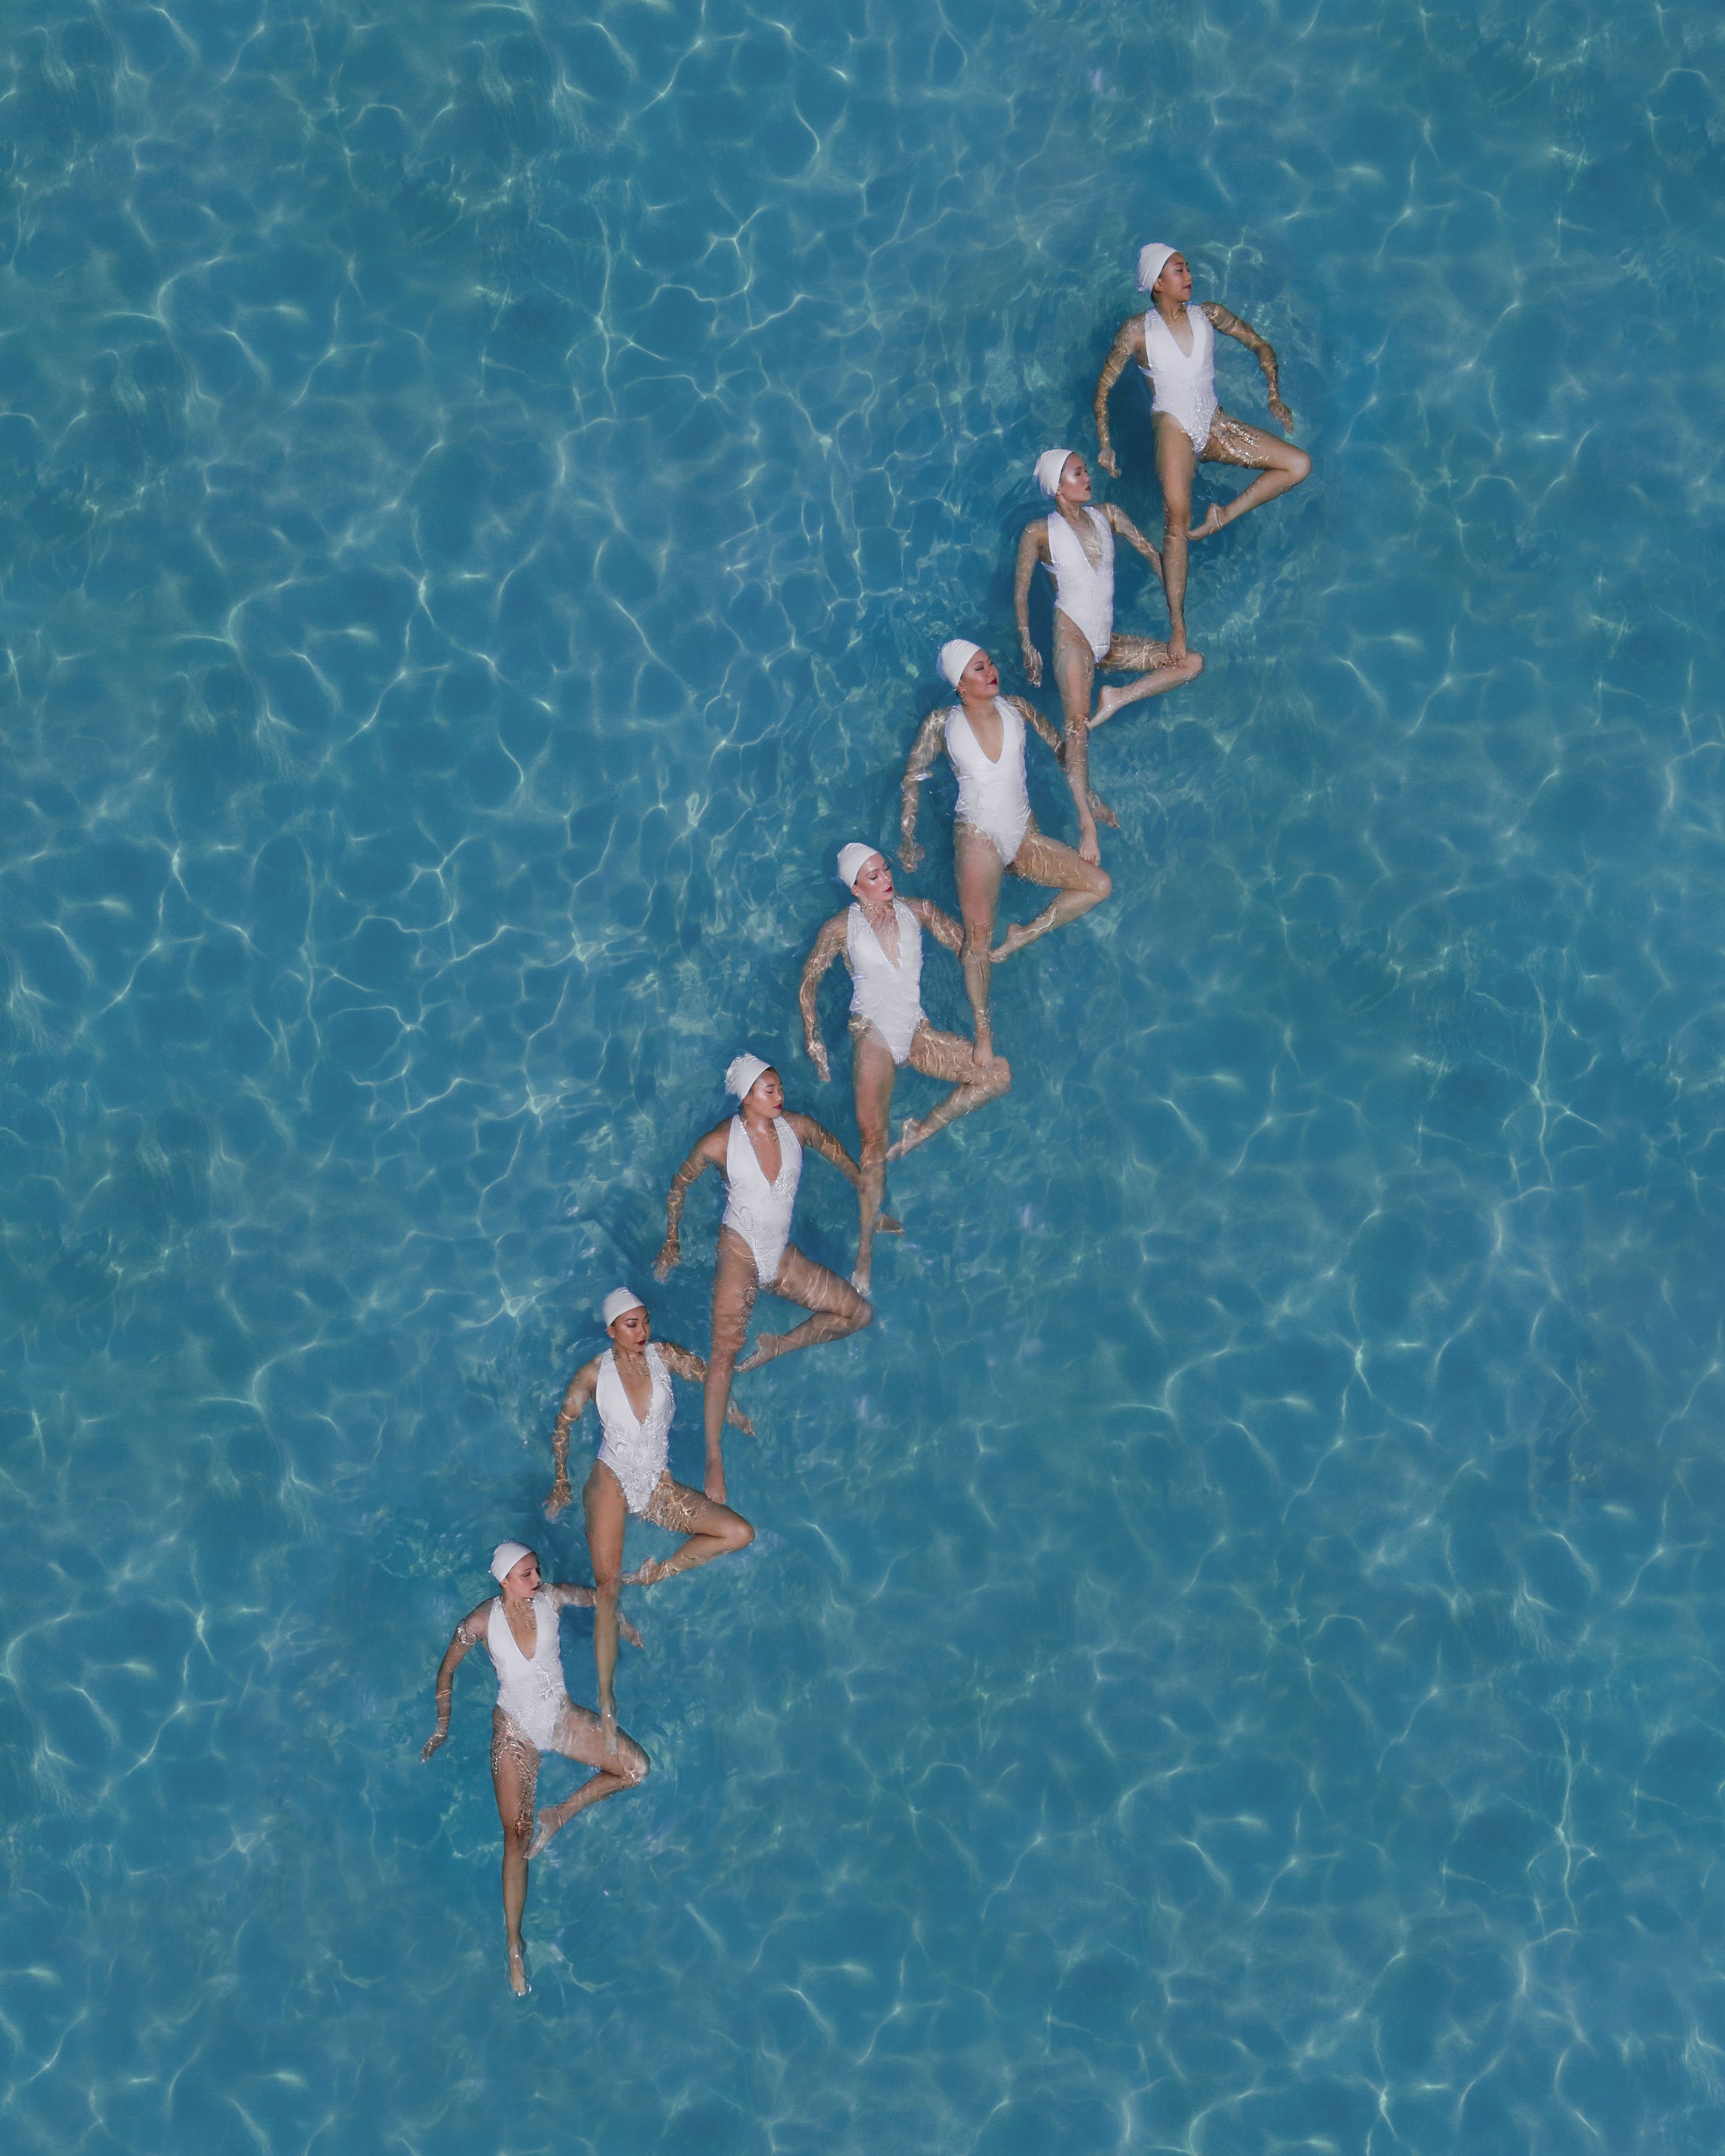 Synchronized Swimming - Brad Walls